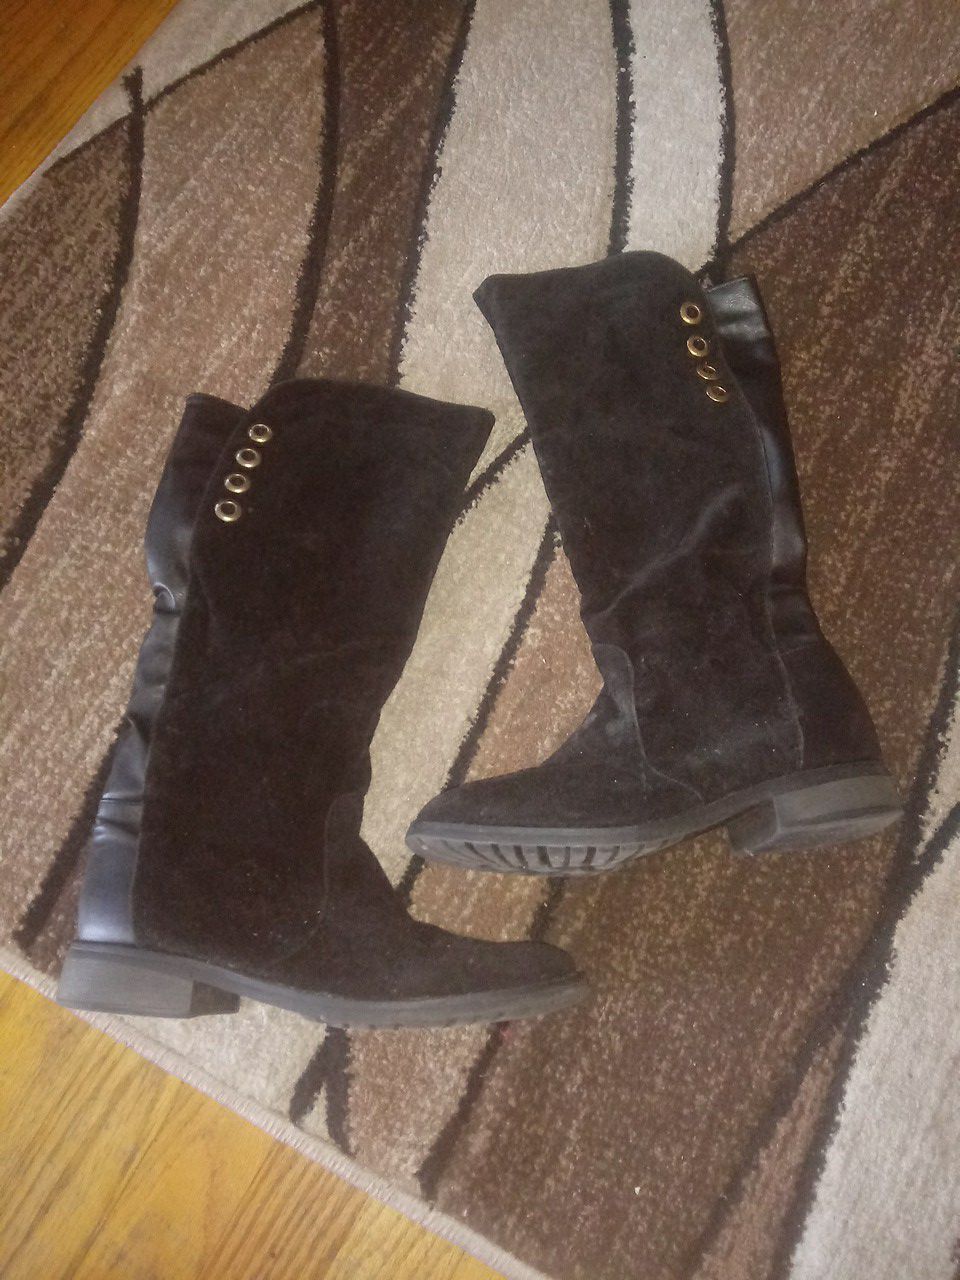 Size 8.5 women boots $10